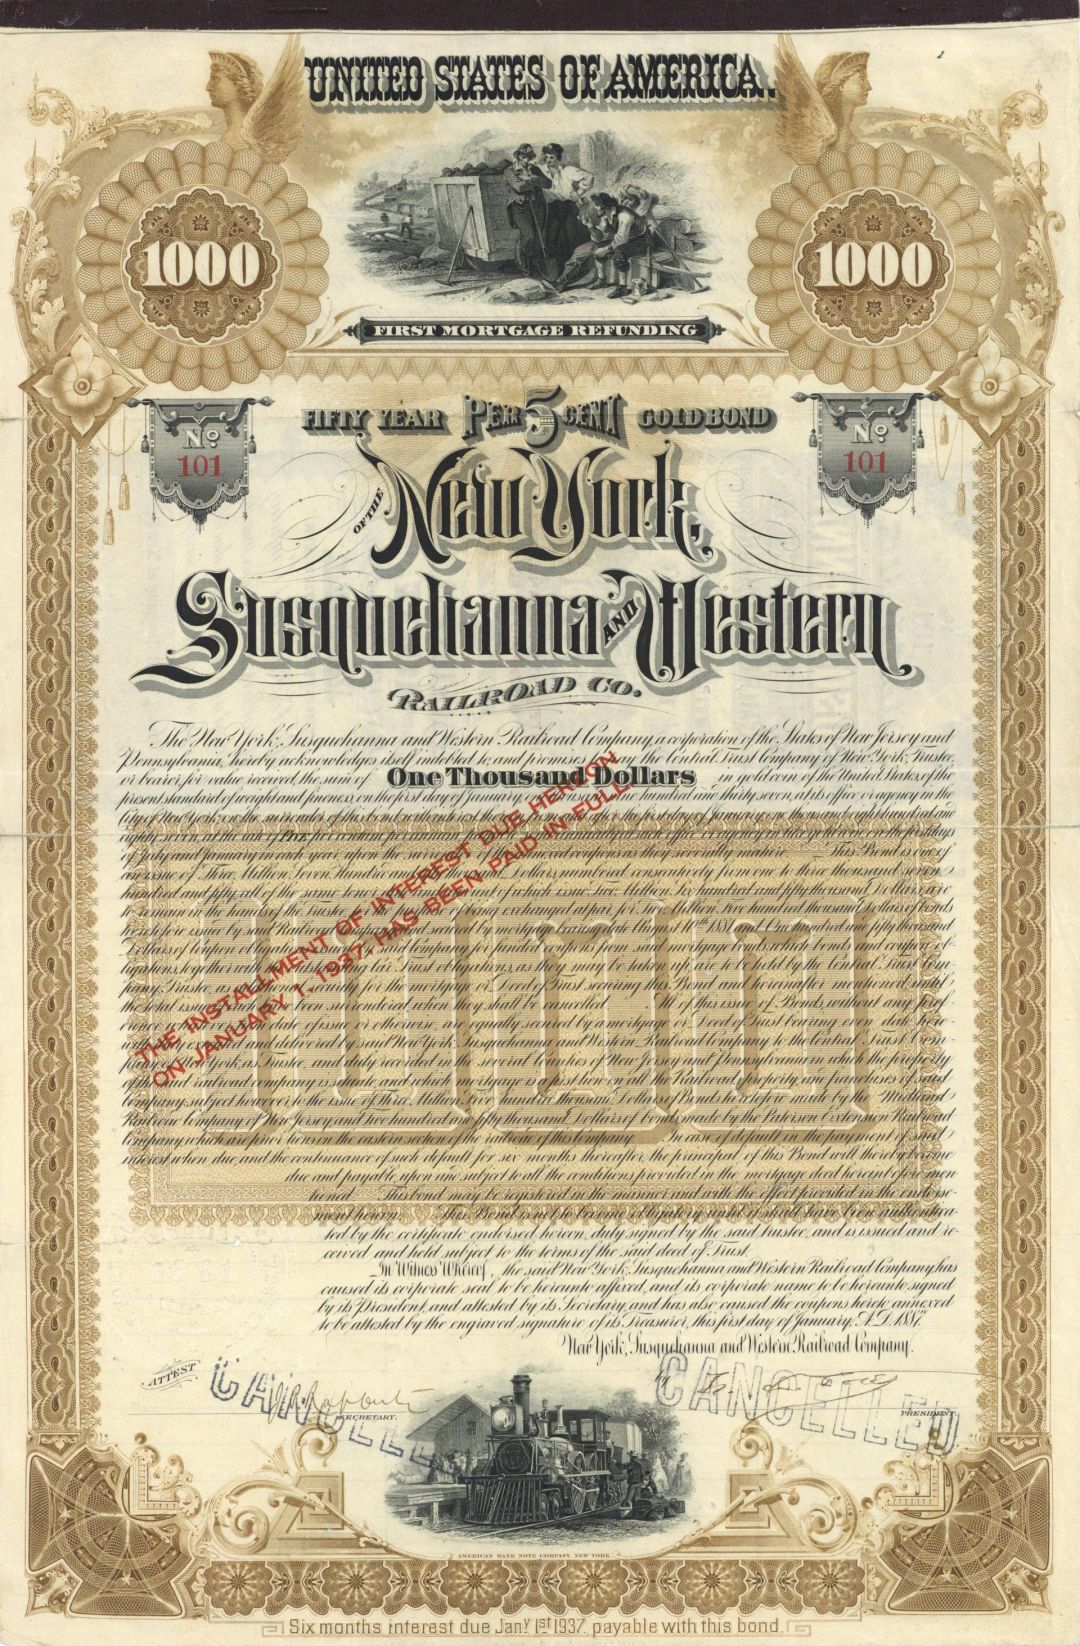 New York, Susquehanna and Western Railroad Co. - 1887 dated $1,000 Railway Gold Bond